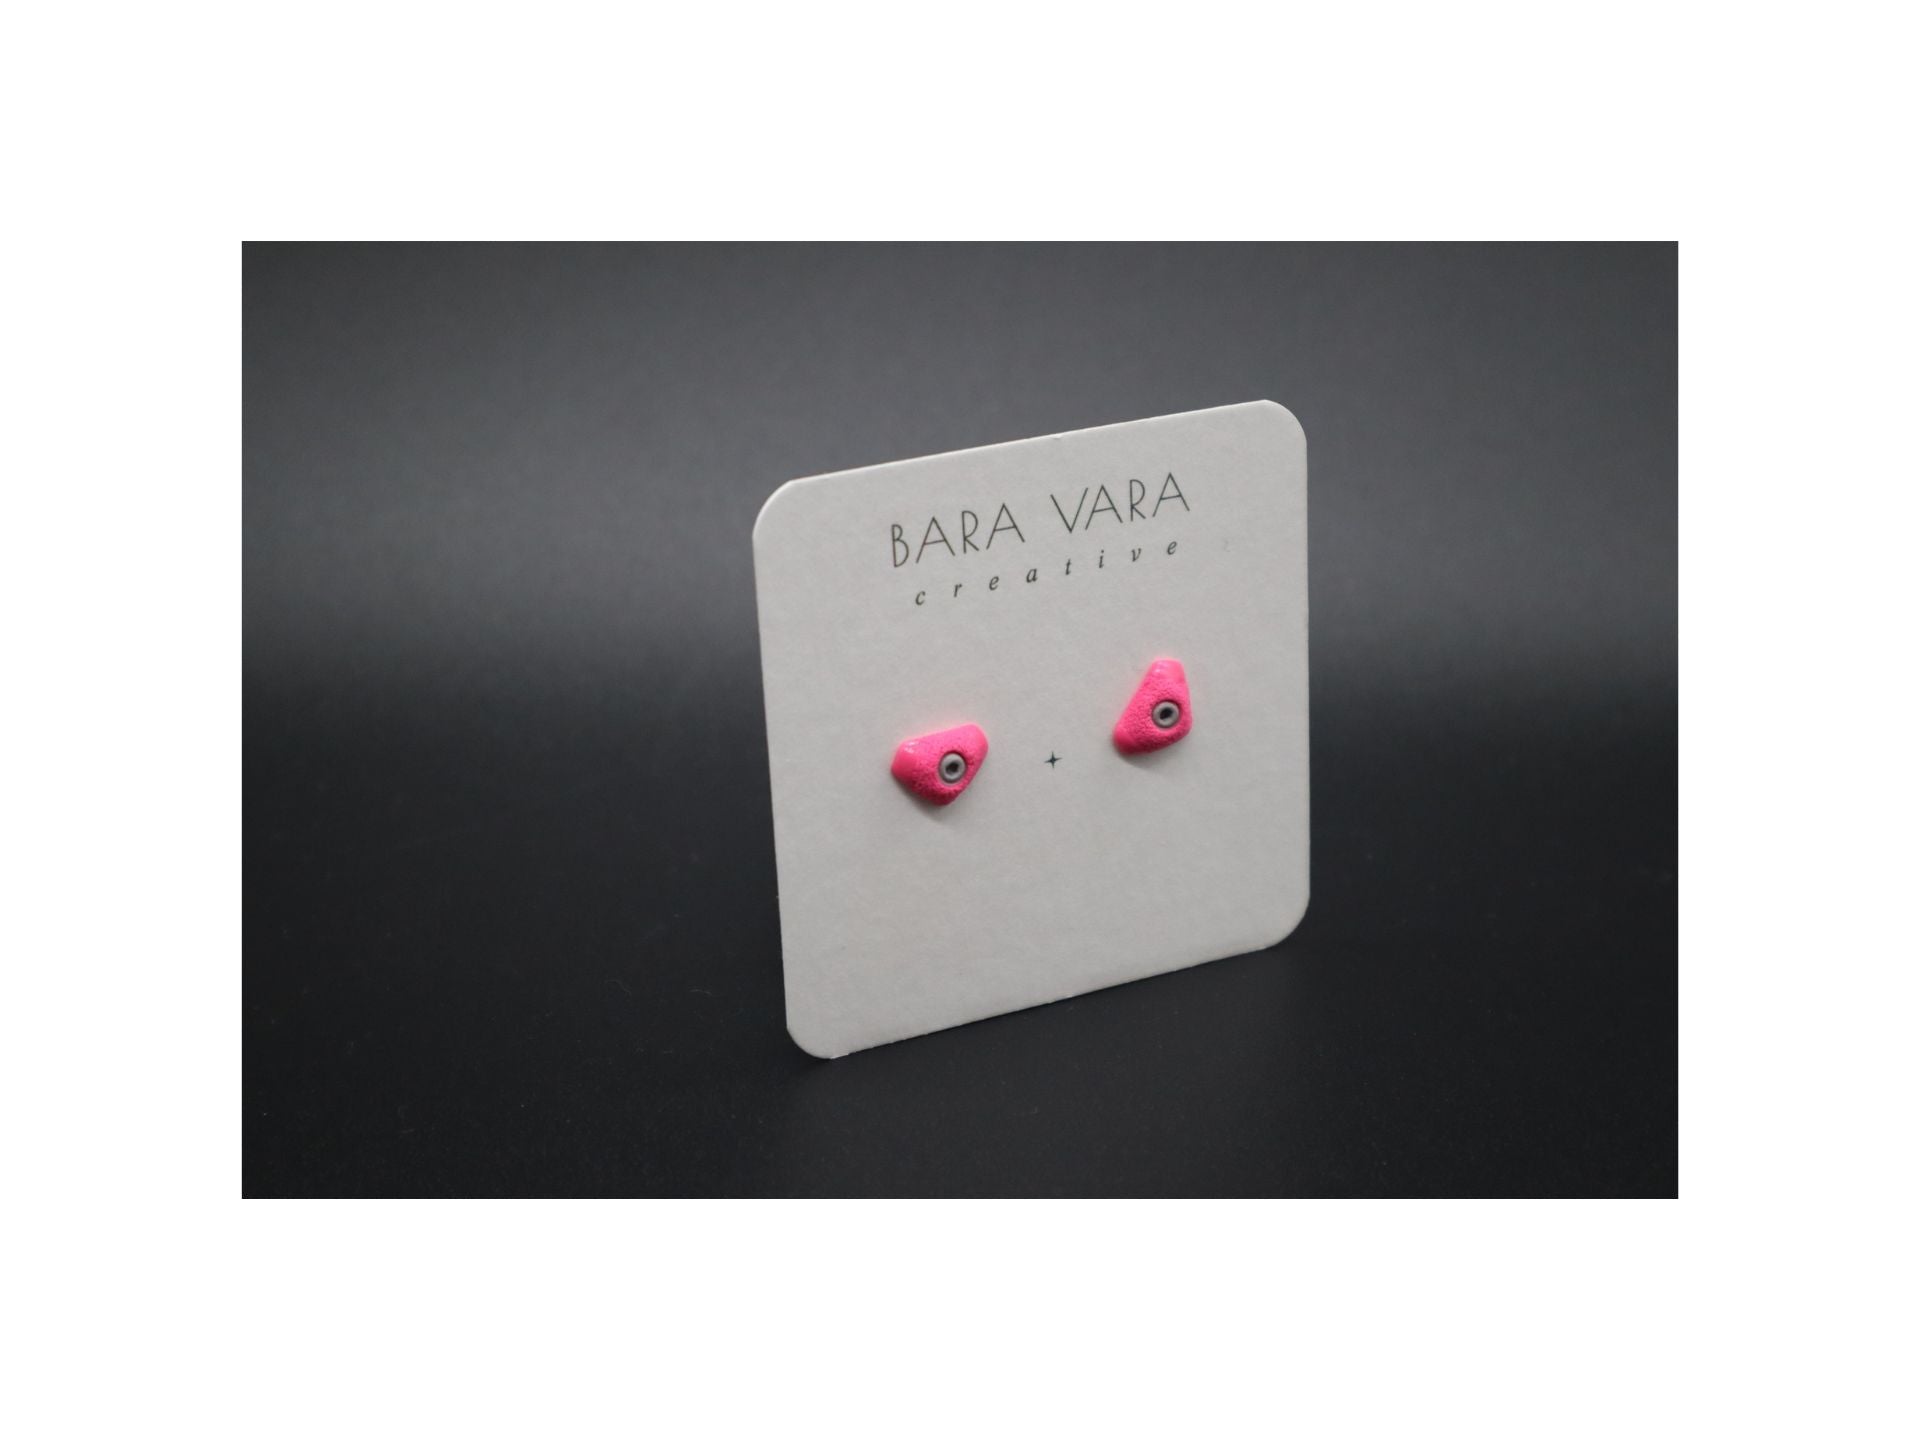 Bara Vara Creative Earrings - Pink Triangle Crimp (Chalkless) - Happy Biner